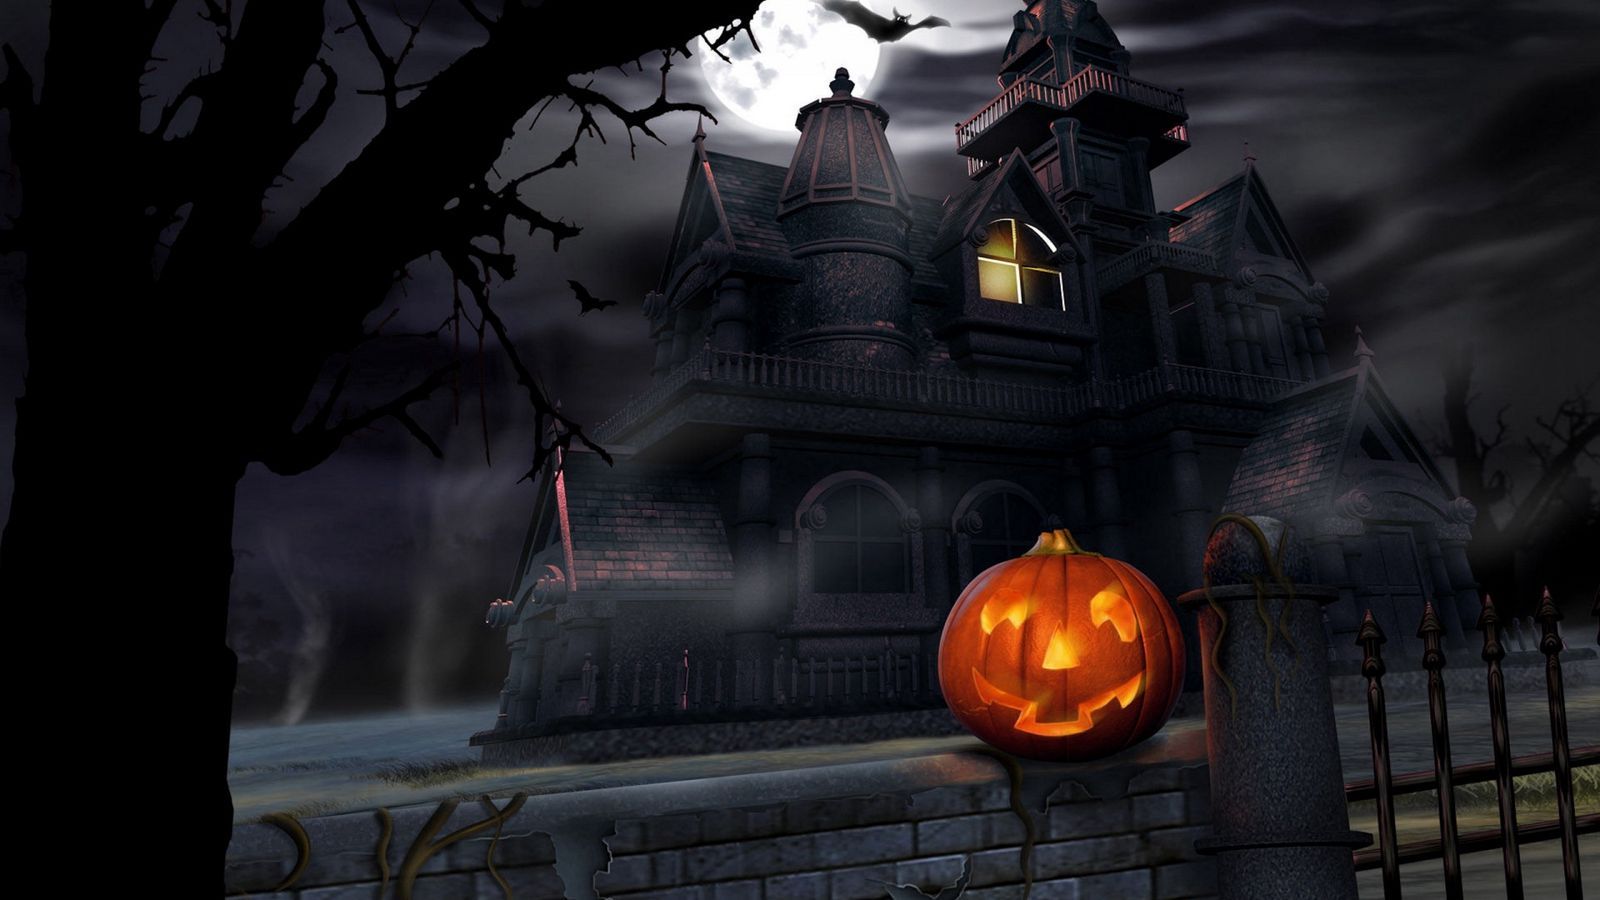 Download wallpaper 1600x900 halloween, pumpkin, lantern, house, darkness, gloom widescreen 16:9 HD background